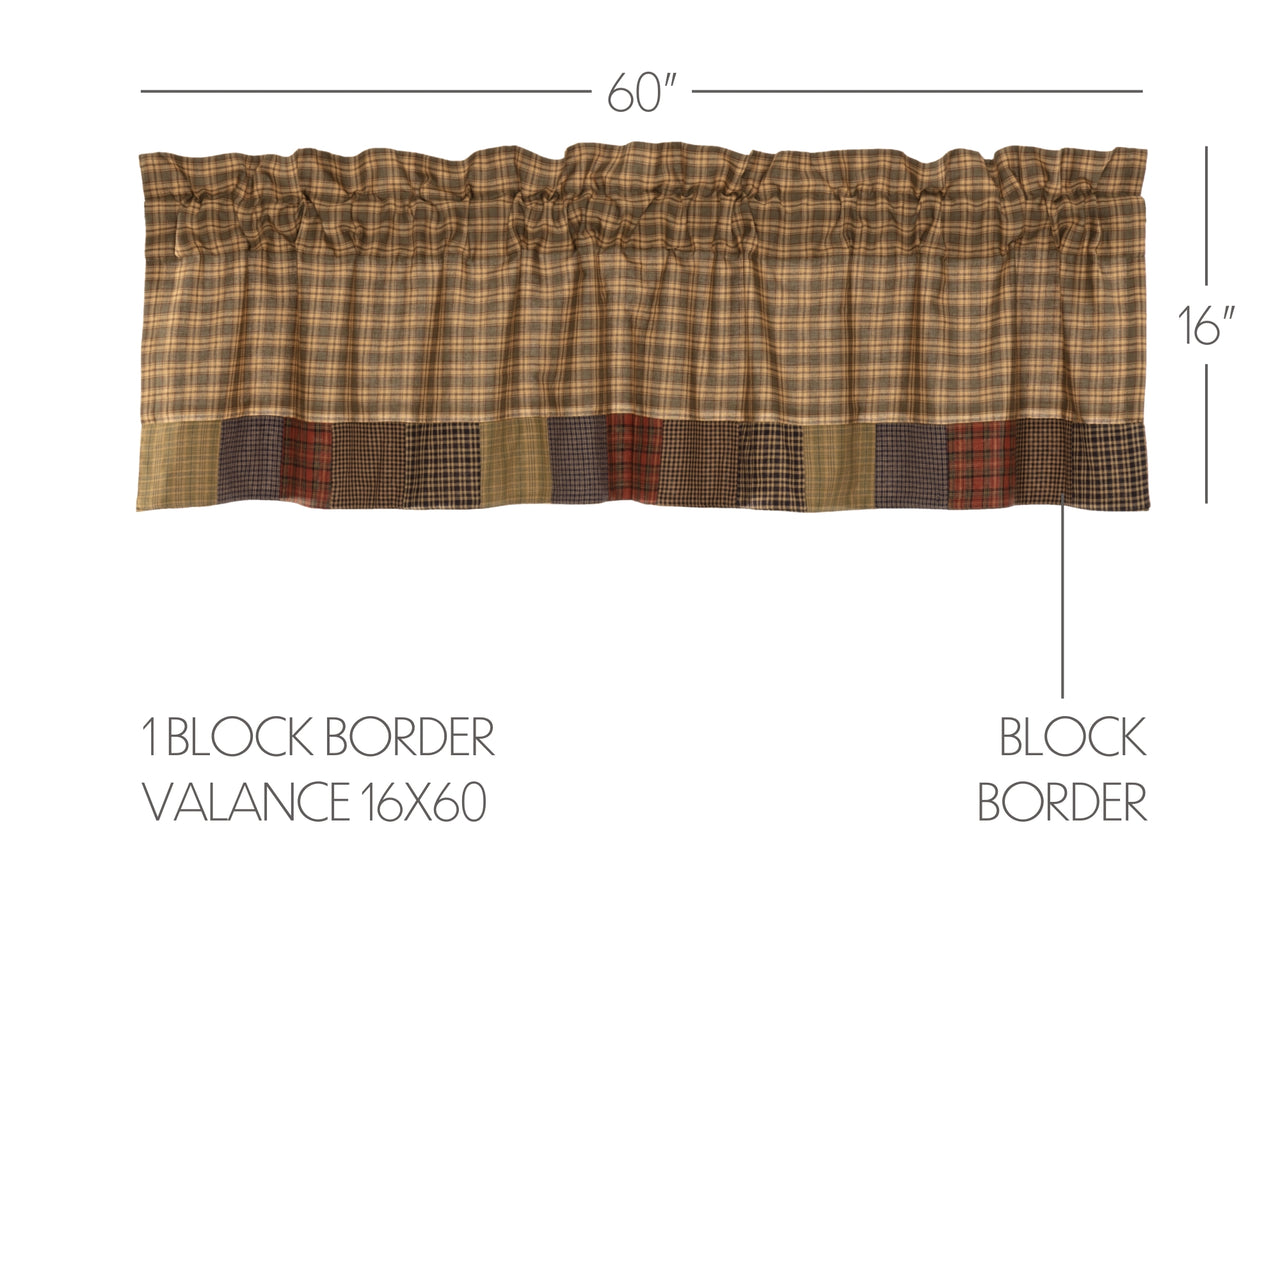 Cedar Ridge Valance Curtain Block Border 16x60 VHC Brands